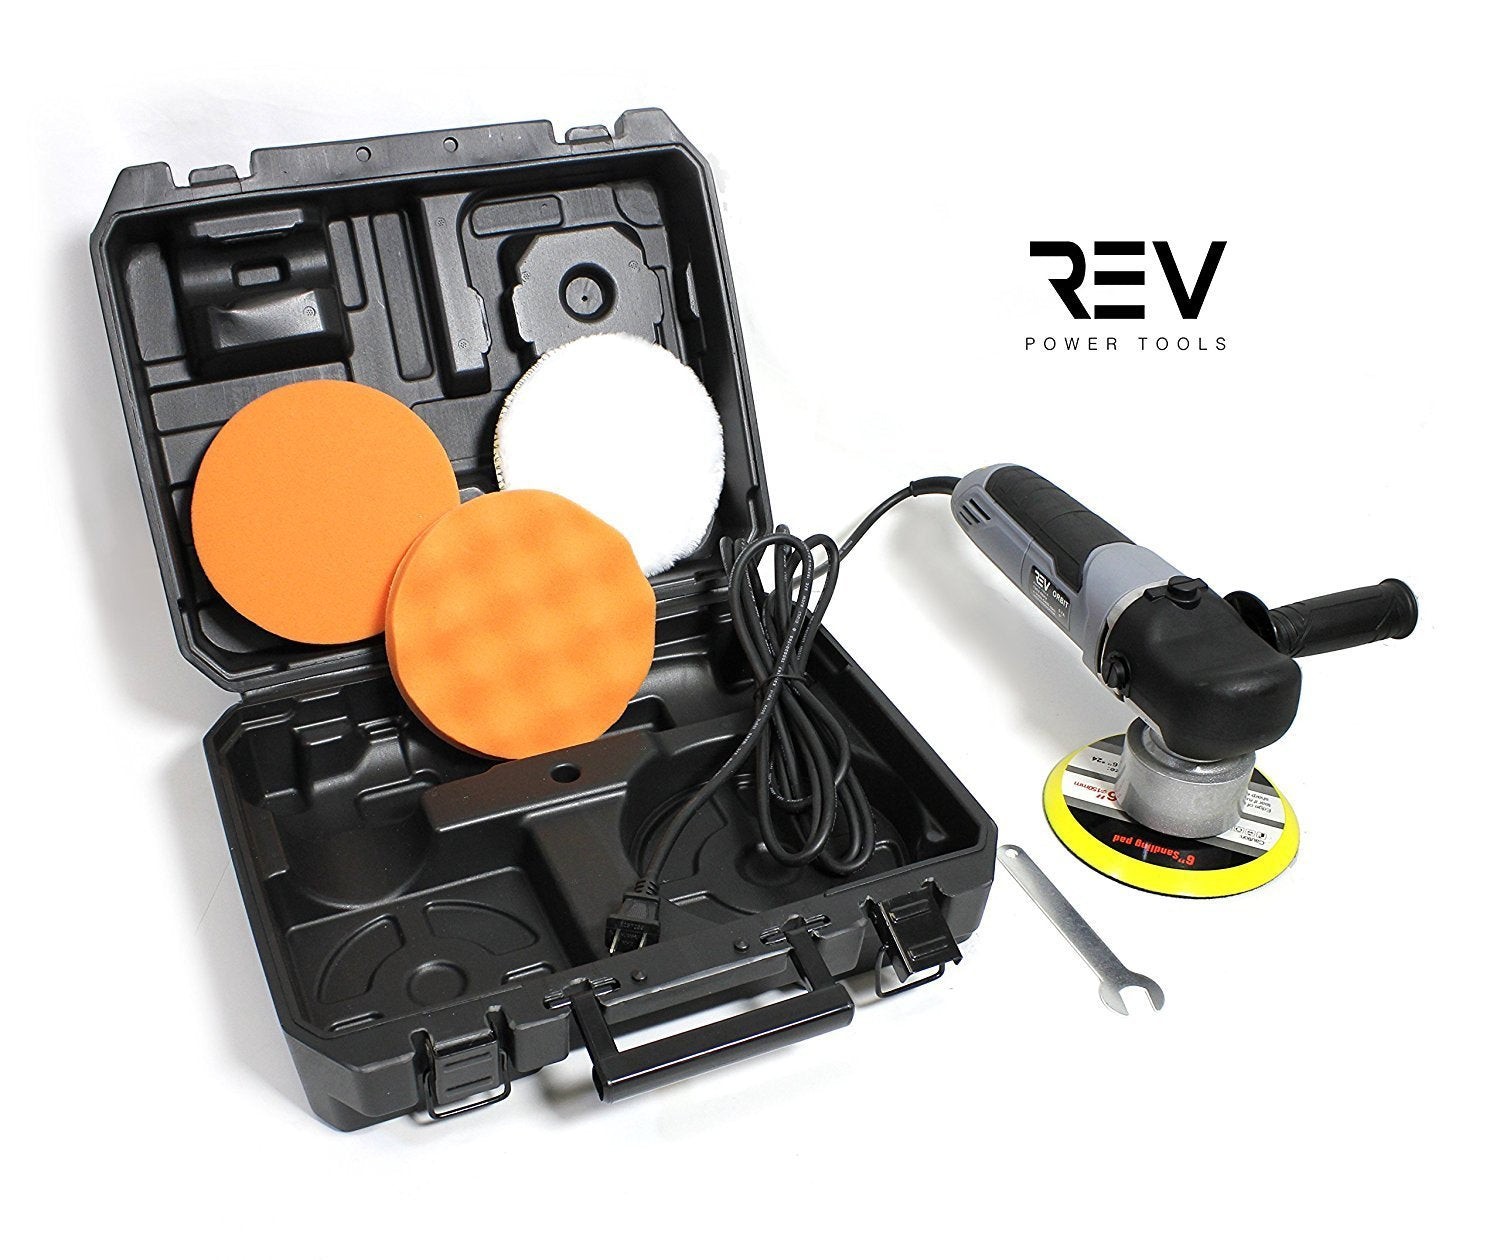 REV 6" Random Orbital Polisher and Sander Power Kit (MCF) - The VViViD Vinyl Wrap Shop